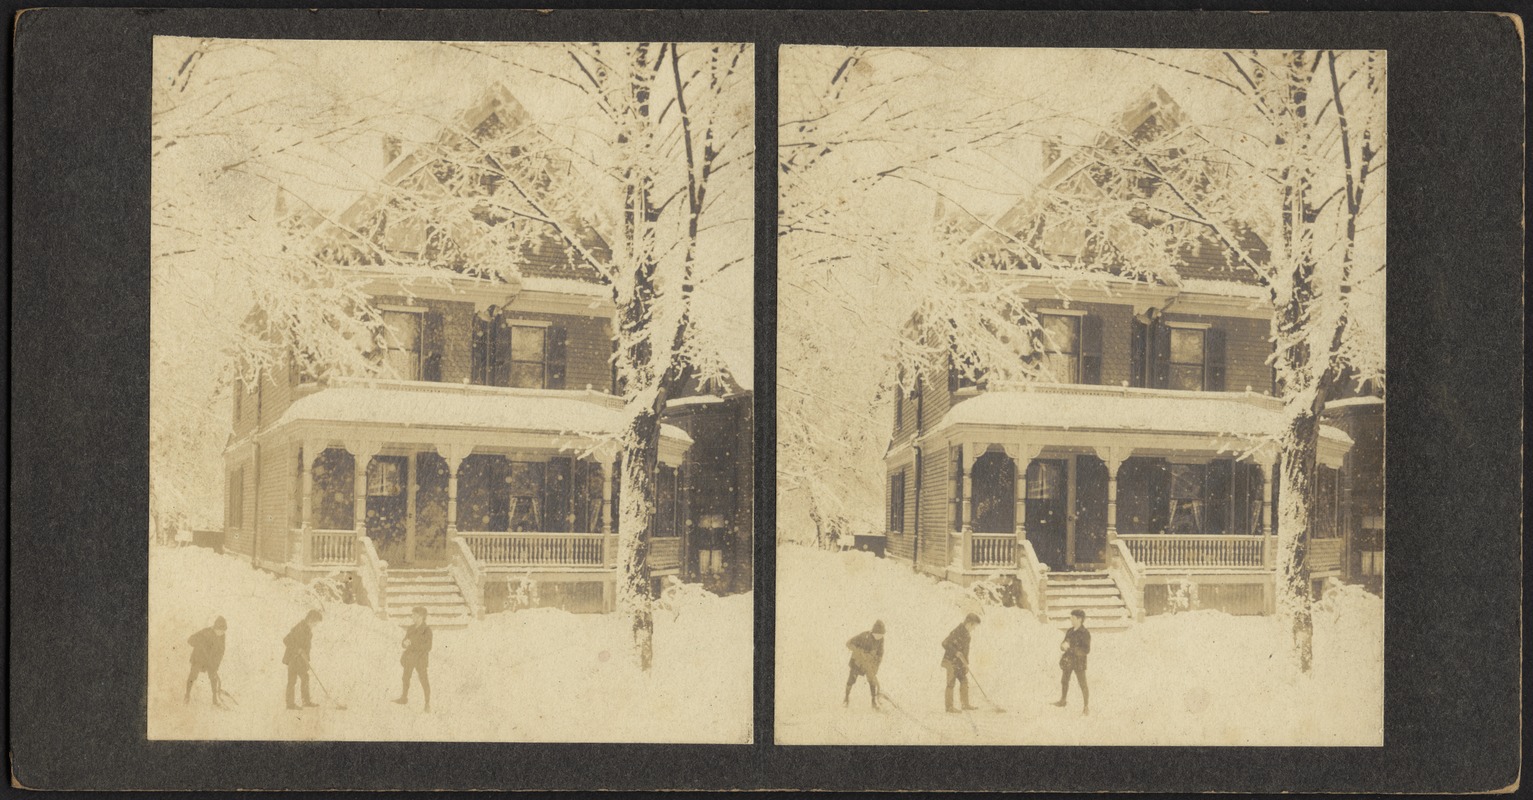 Children shoveling snow in front of house